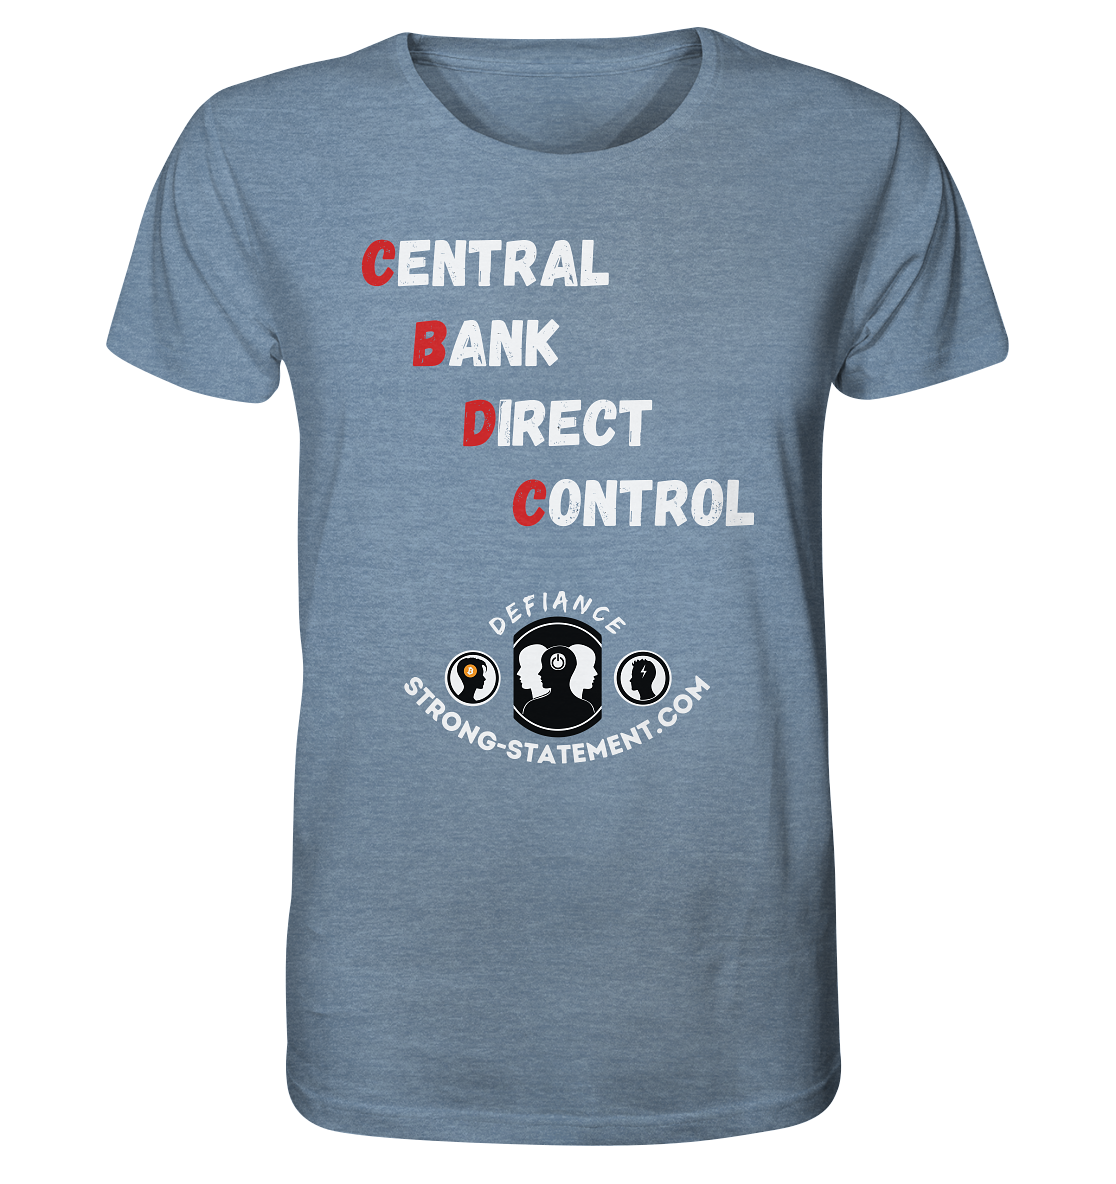 CENTRAL BANK DIRECT CONTROL - Defiance - Strong-Statement.com - Organic Shirt (meliert)